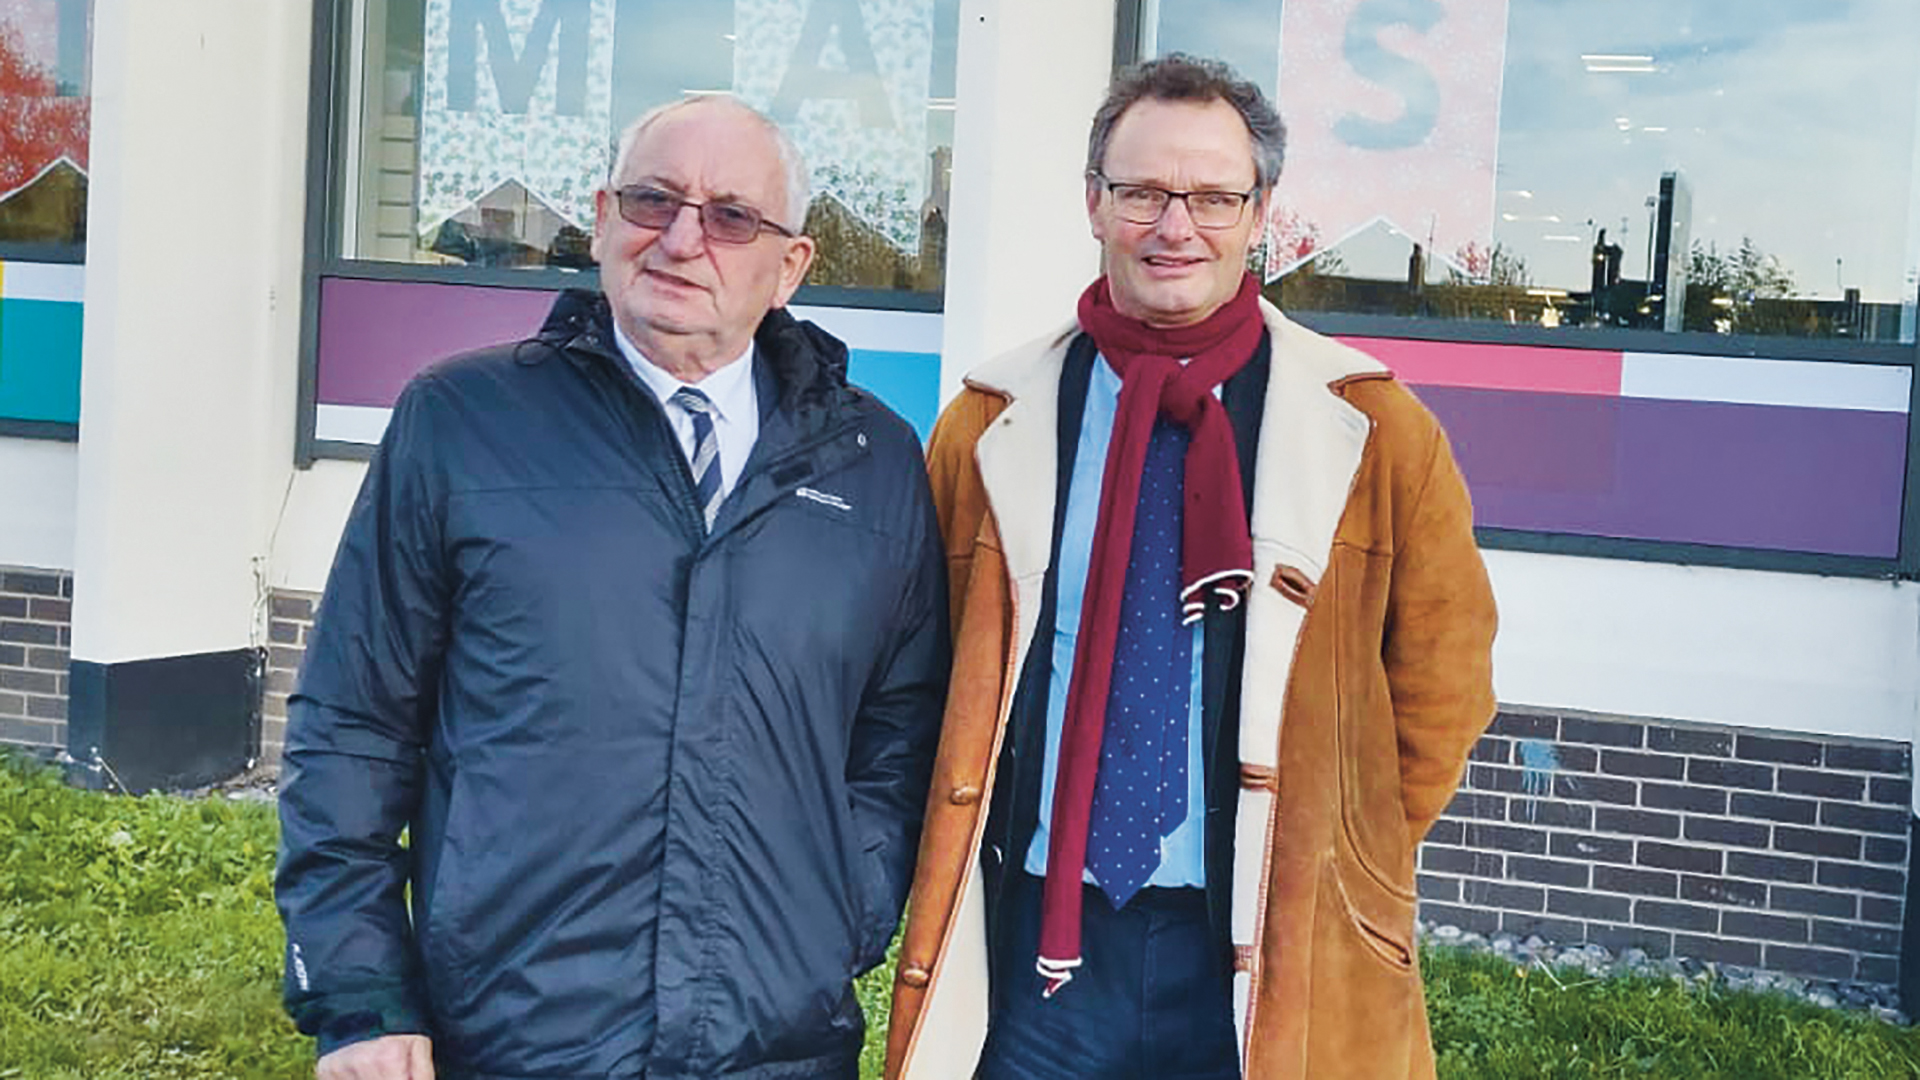 John Bird and Peter Aldous visit a community in Lowestoft